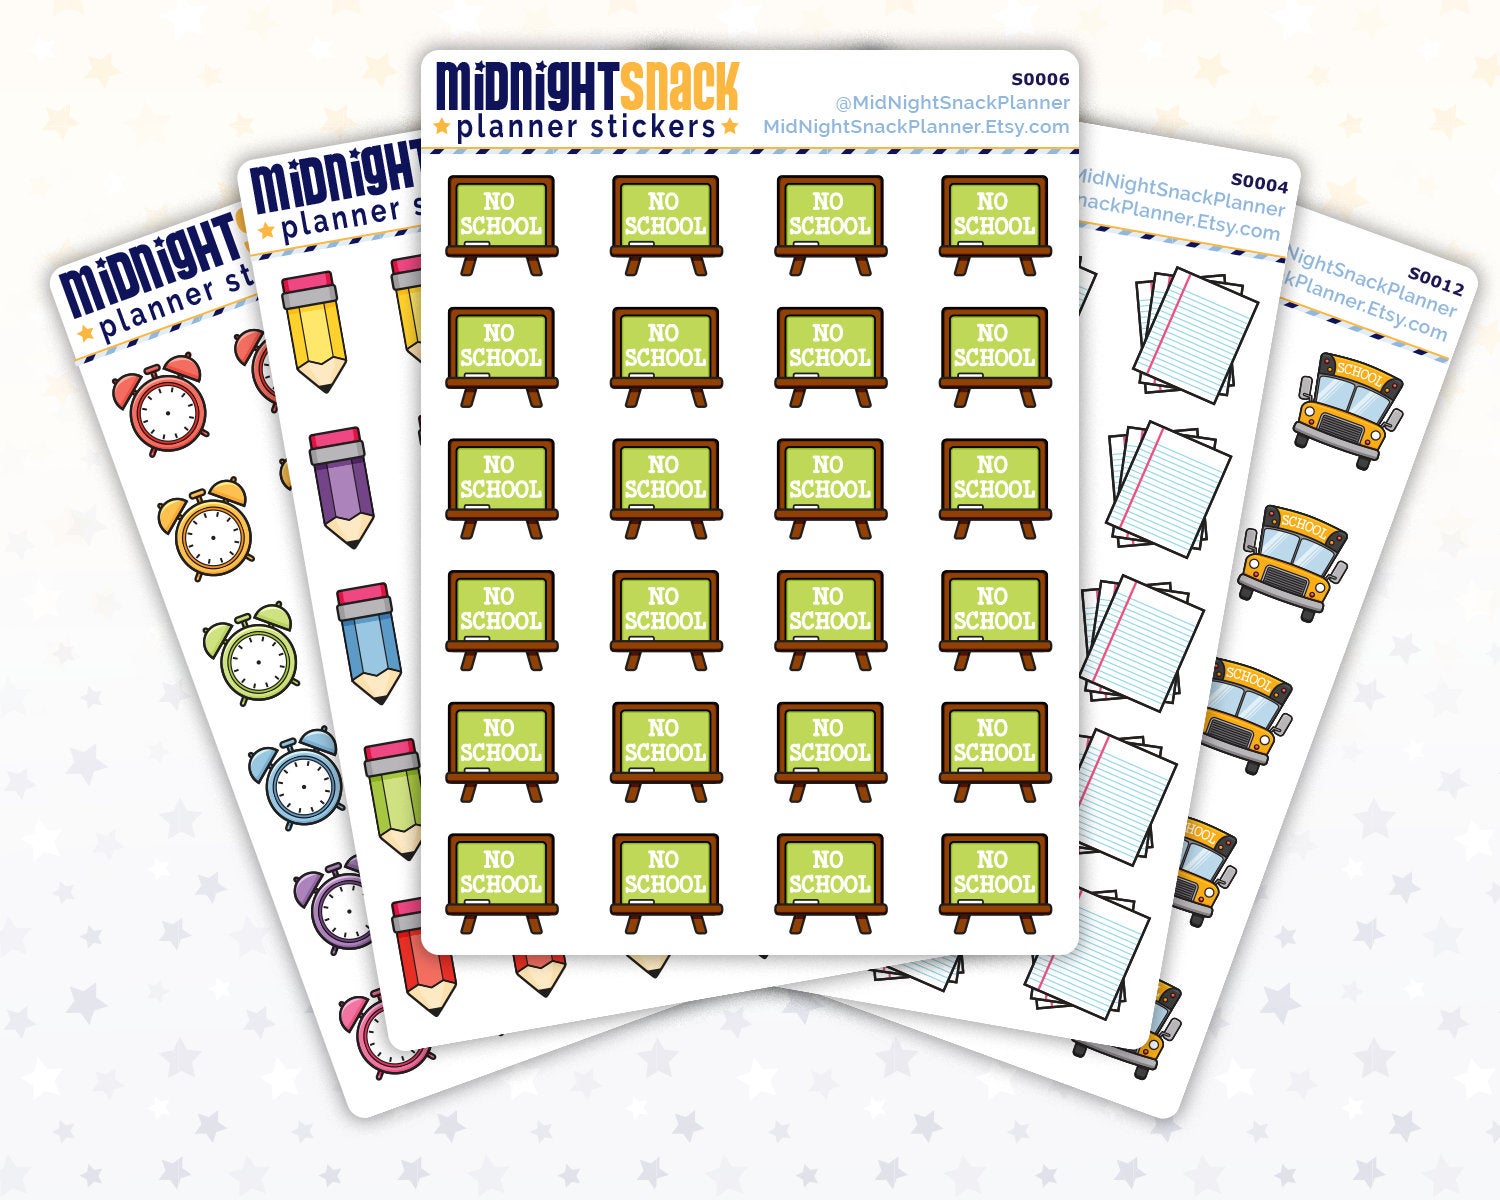 5 Sheet Bundle of School Planner Stickers from Midnight Snack Planner